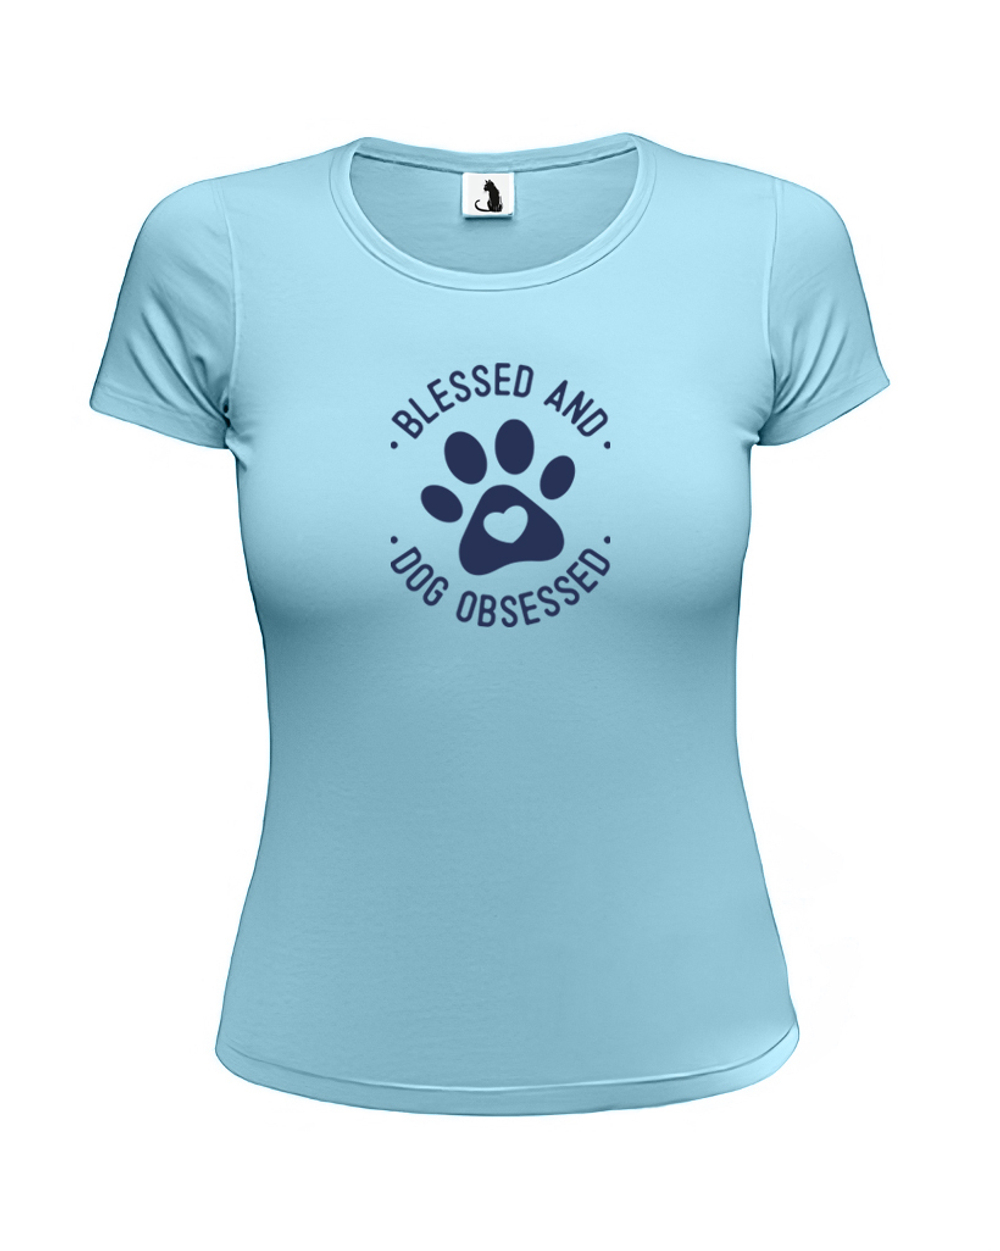 Футболка Blessed and dog obsessed женская приталенная голубая с синим рисунком